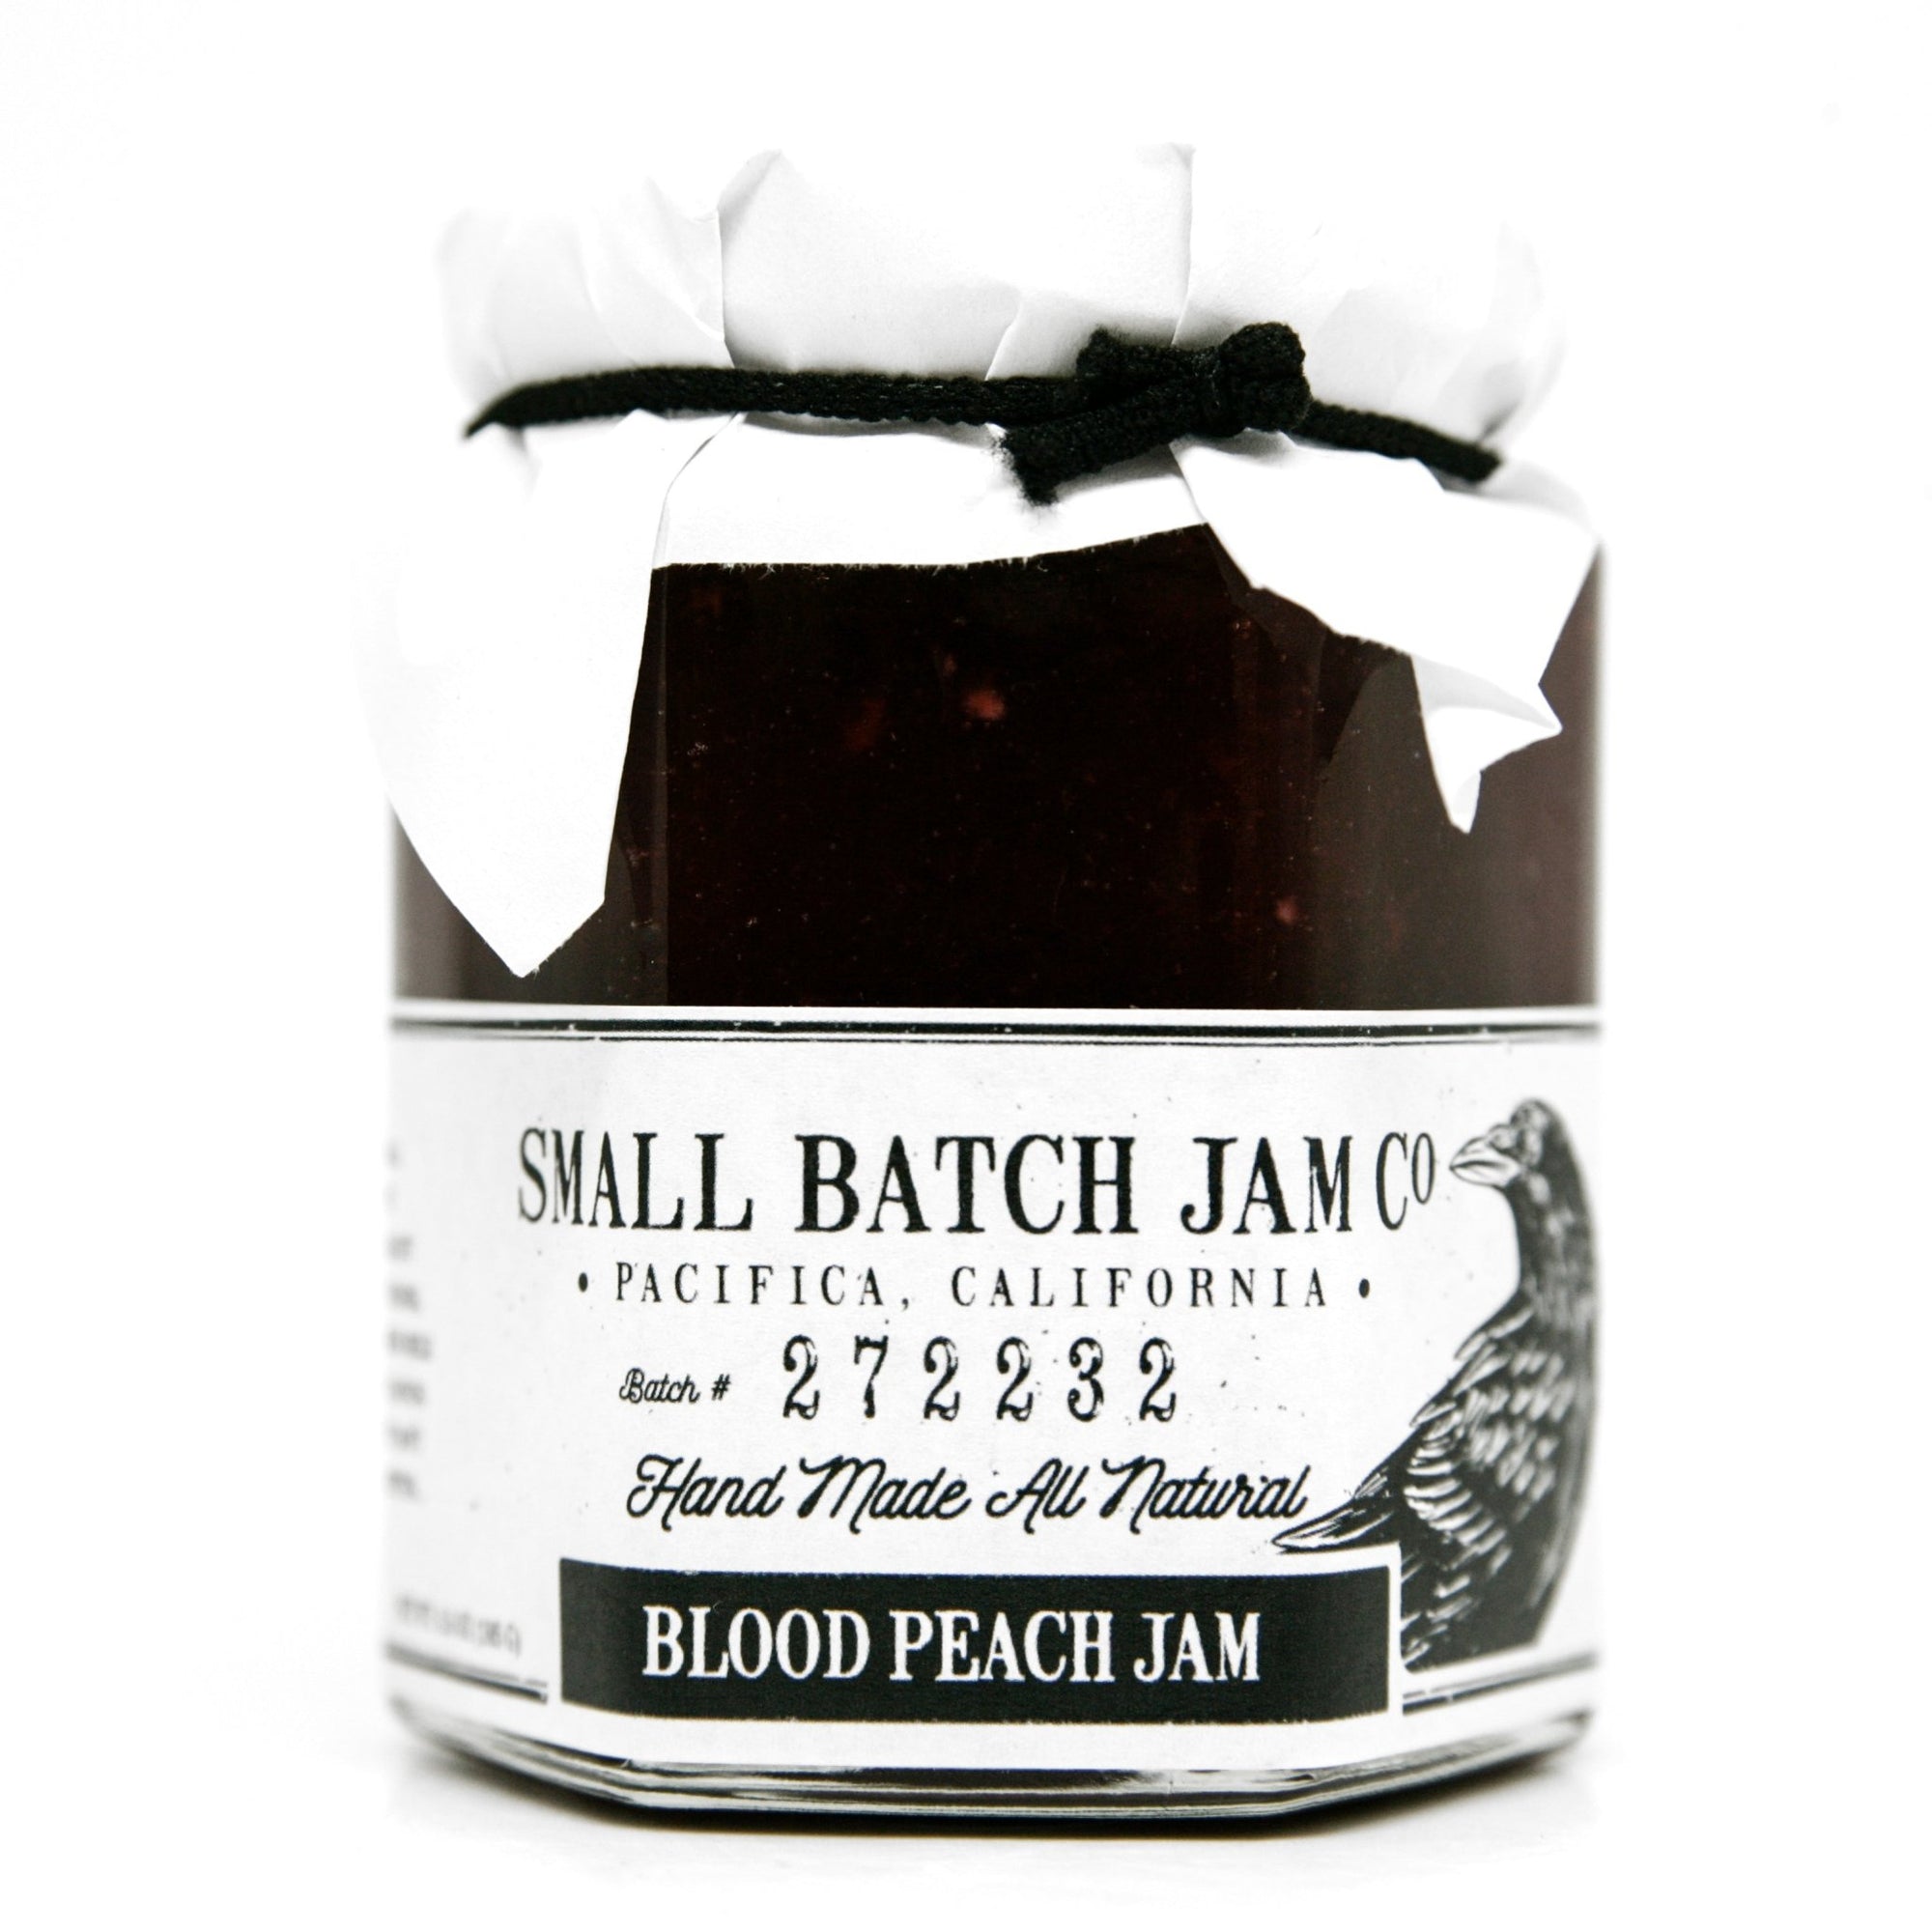 Blood Peach Jam - Small Batch Jam Co